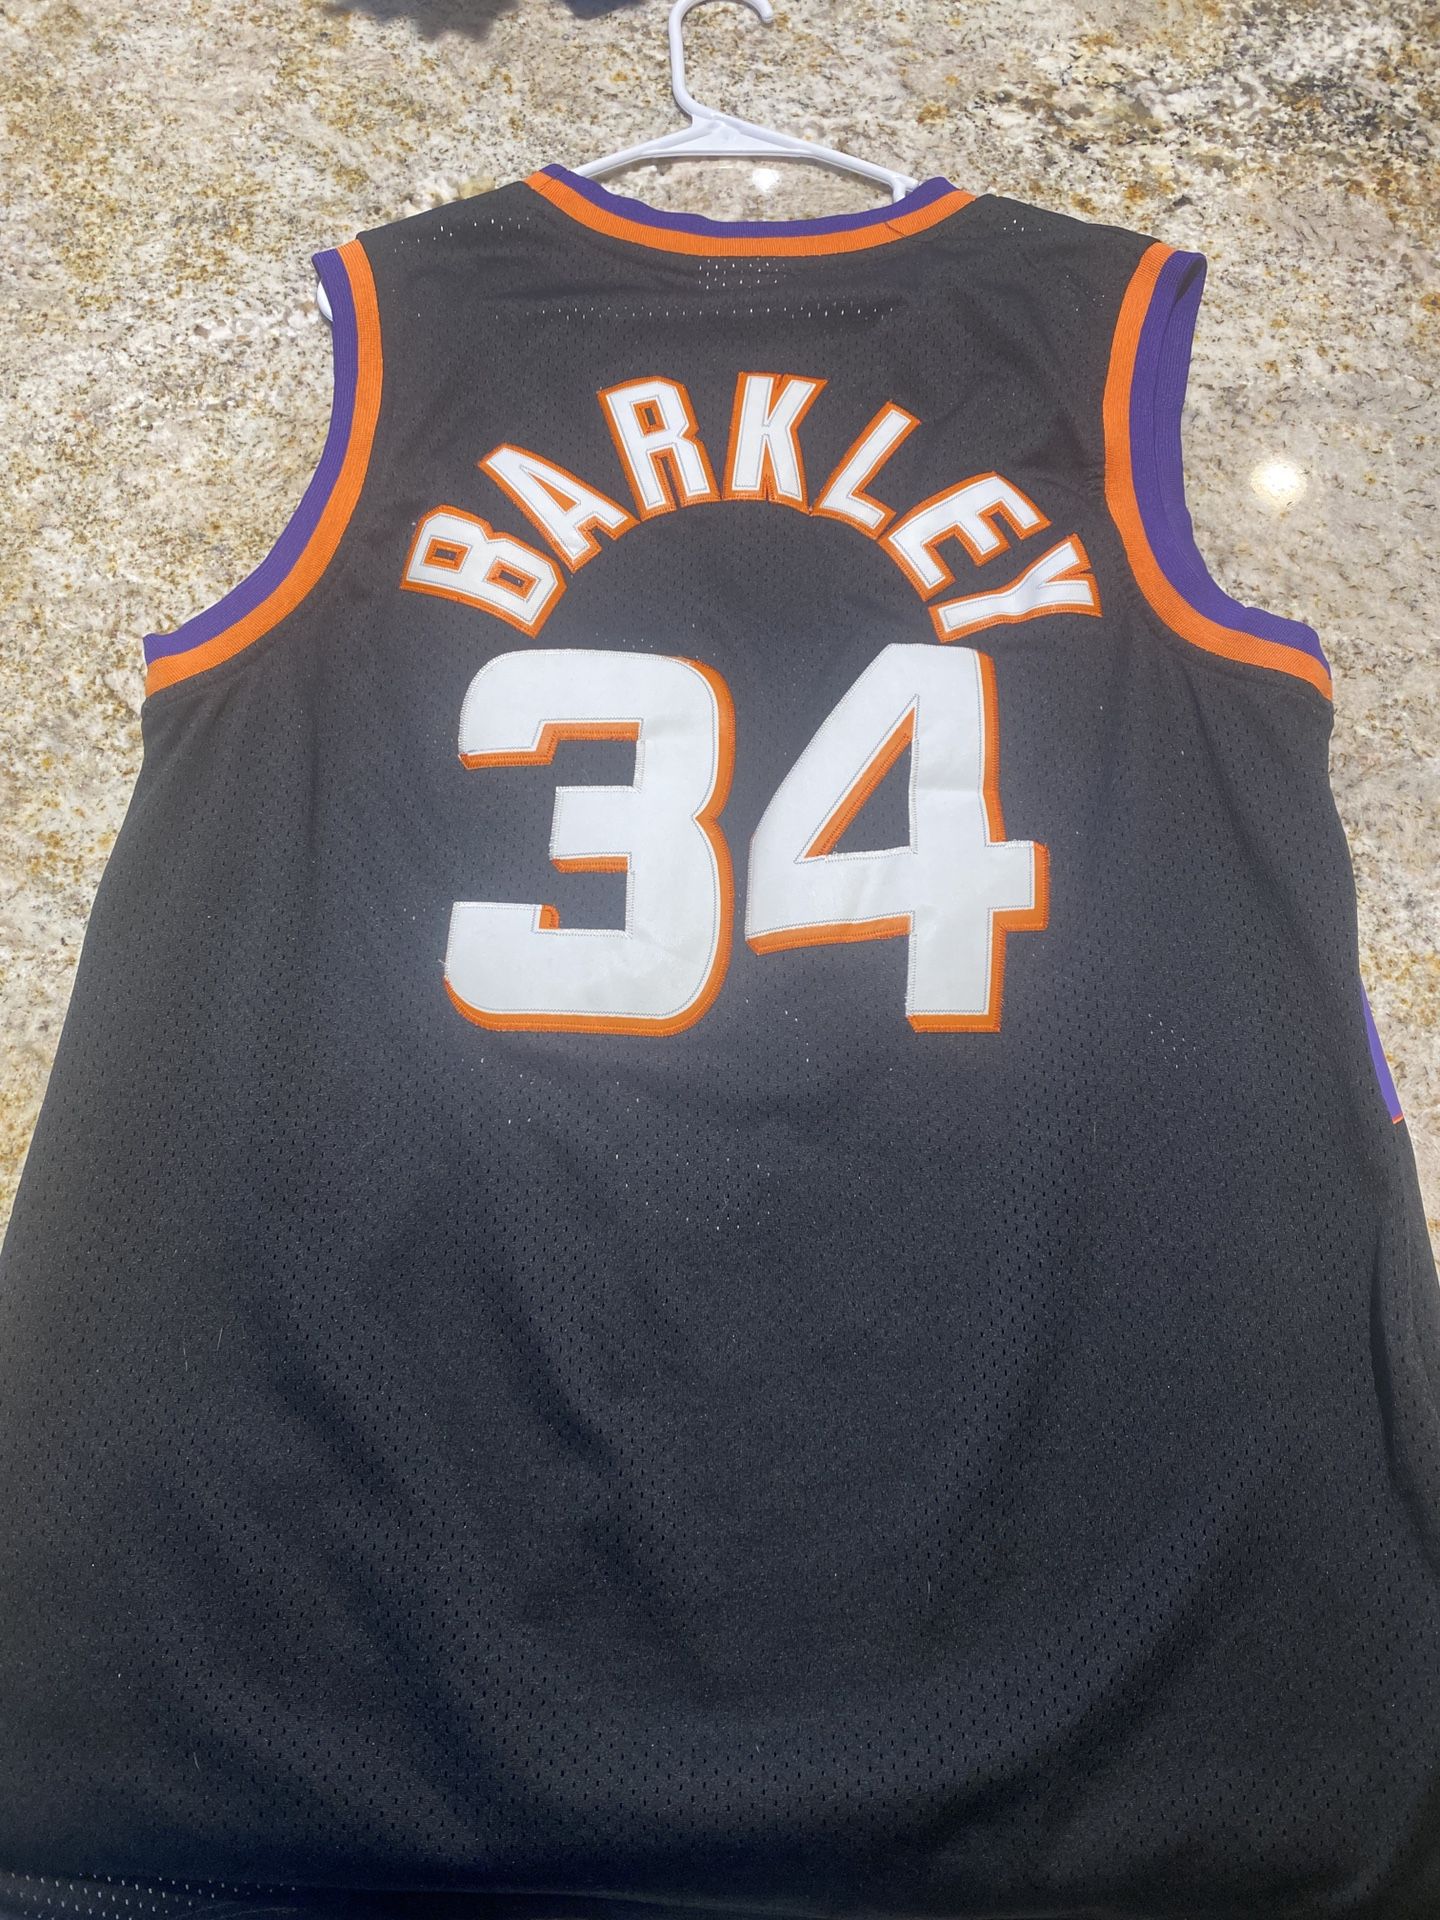 34 Charles Barkley Phoenix Suns Black Hardwood Classic Jersey (S) Length +2